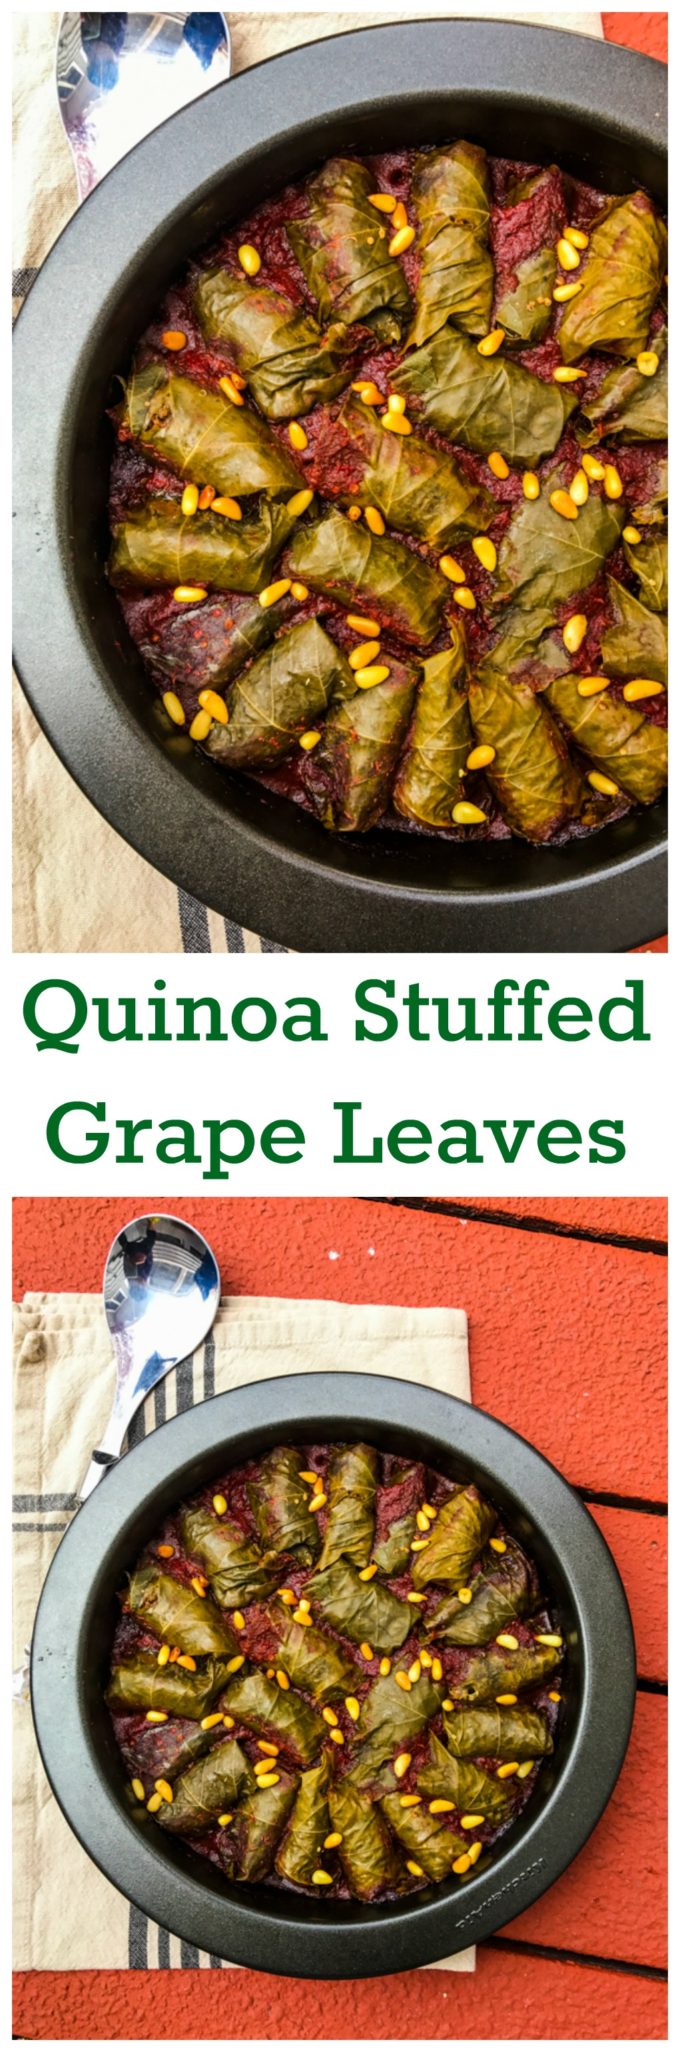 Quinoa Stuffed Grape Leaves In Red Wine Sauce - Vegan, vegetarian, gluten free, holiday recipe, passover recipe